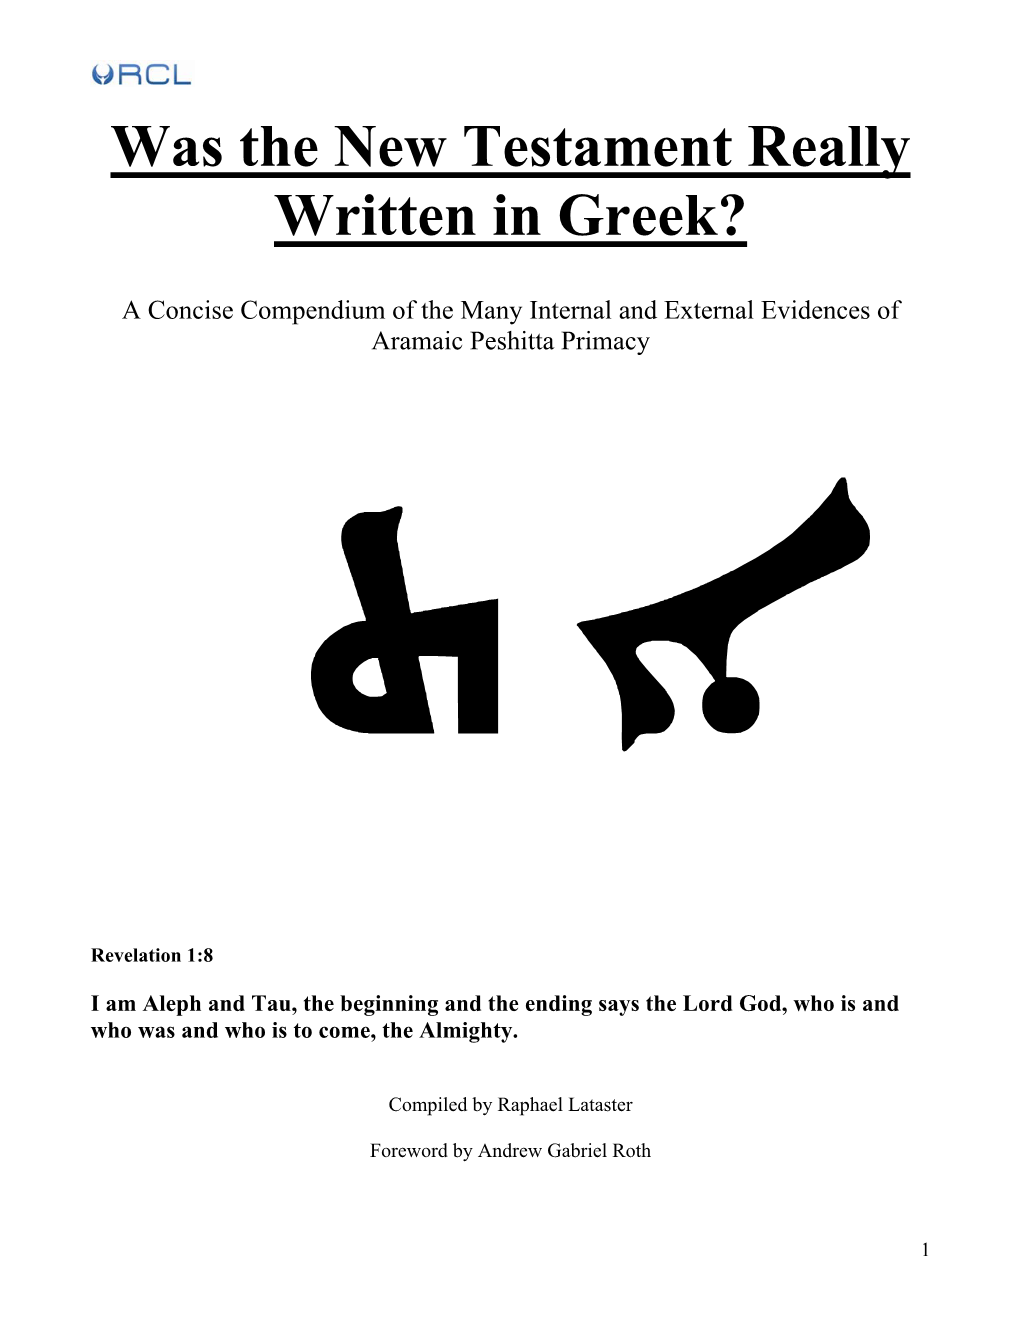 Was the New Testament Really Written in Greek?